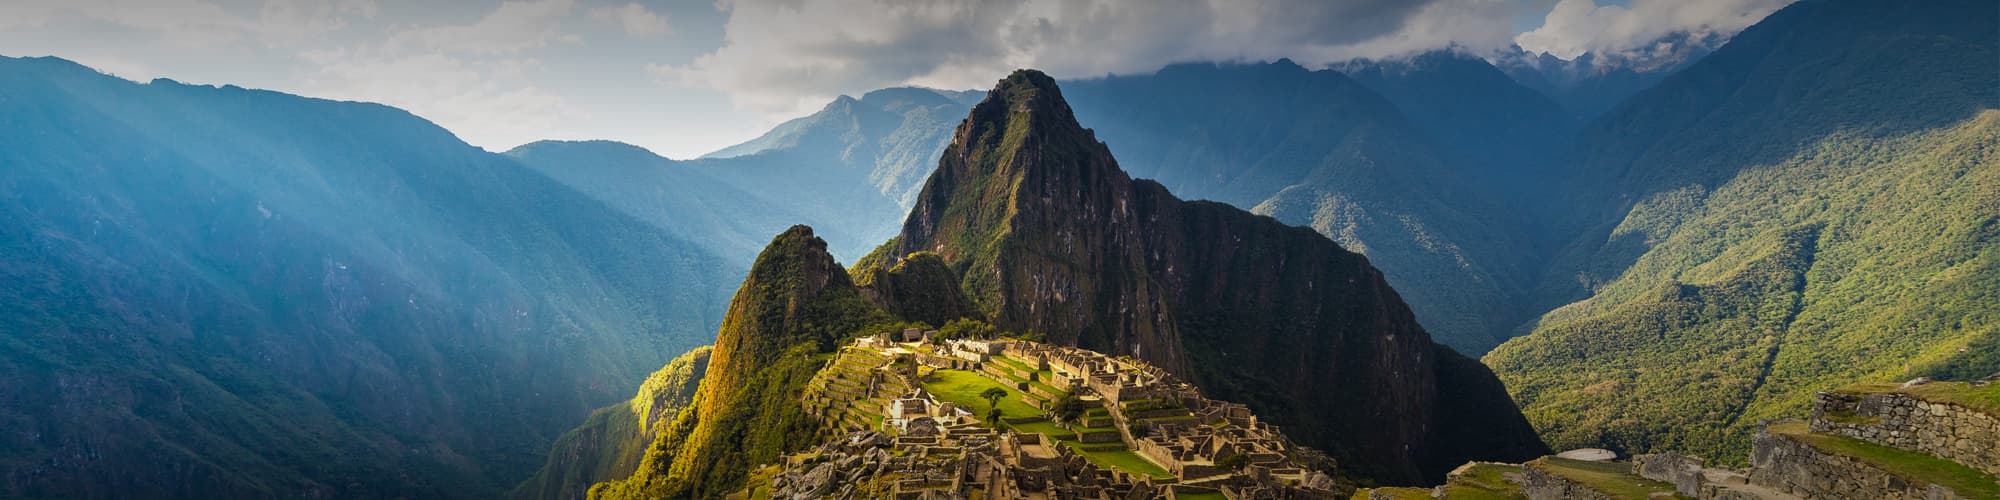 Voyage en famille Pérou © Oversnap / iStock